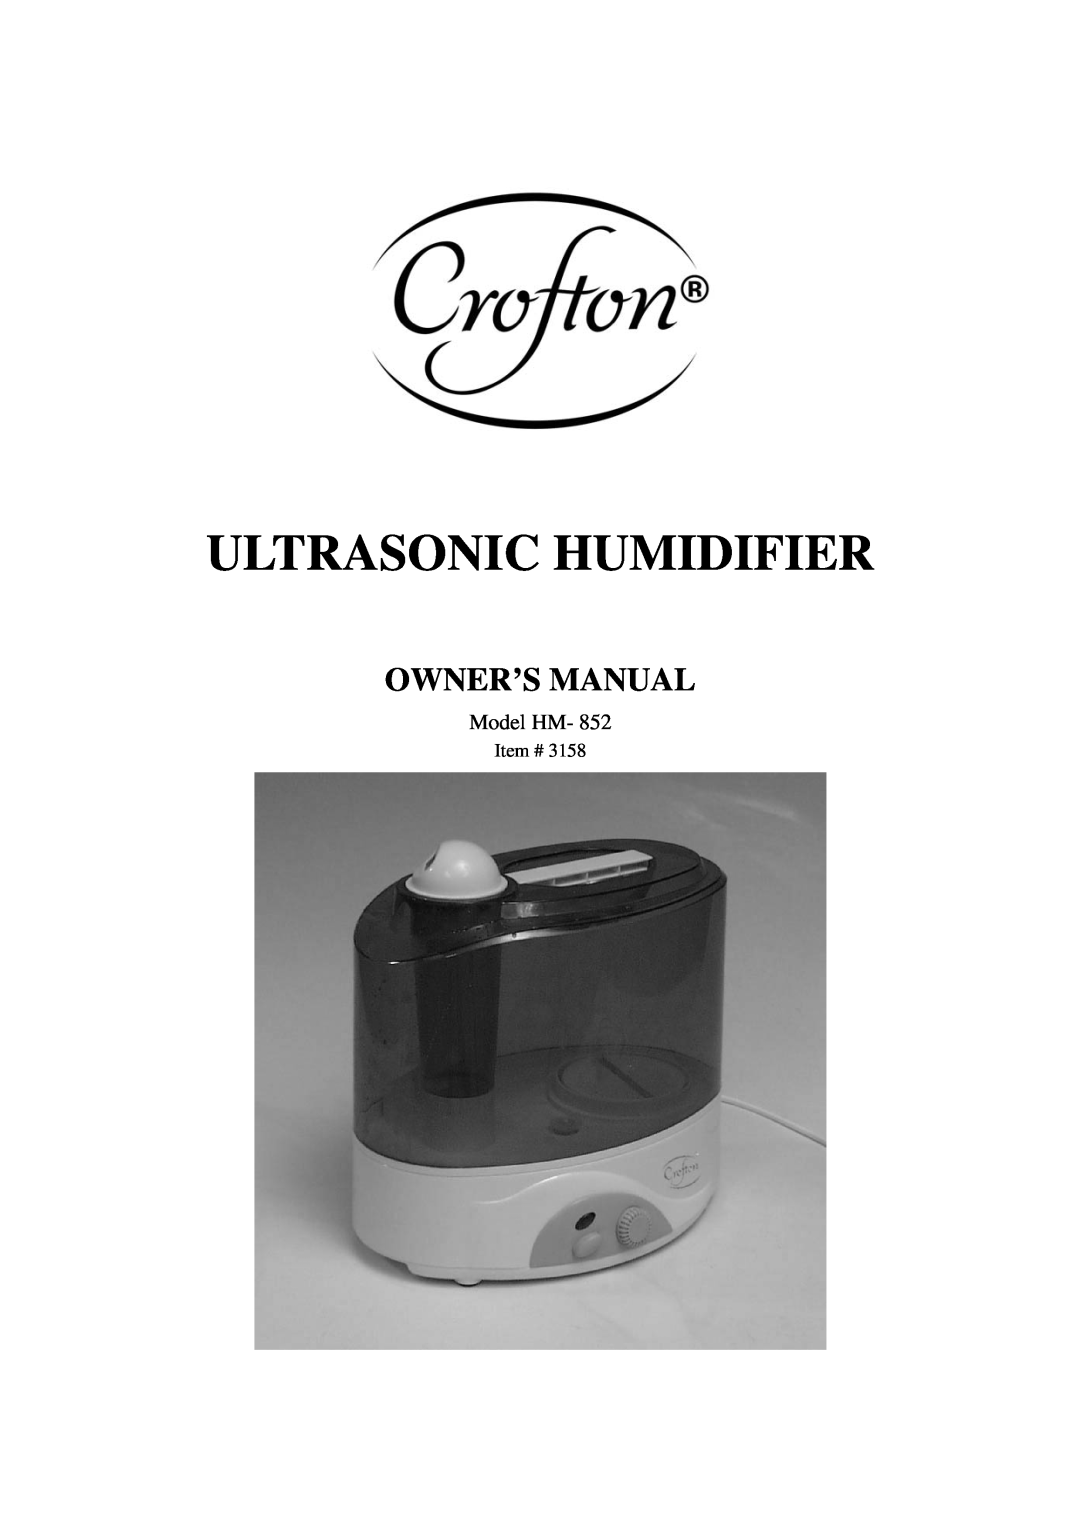 Wachsmuth & Krogmann HM- 852 owner manual Ultrasonic Humidifier, Item # 